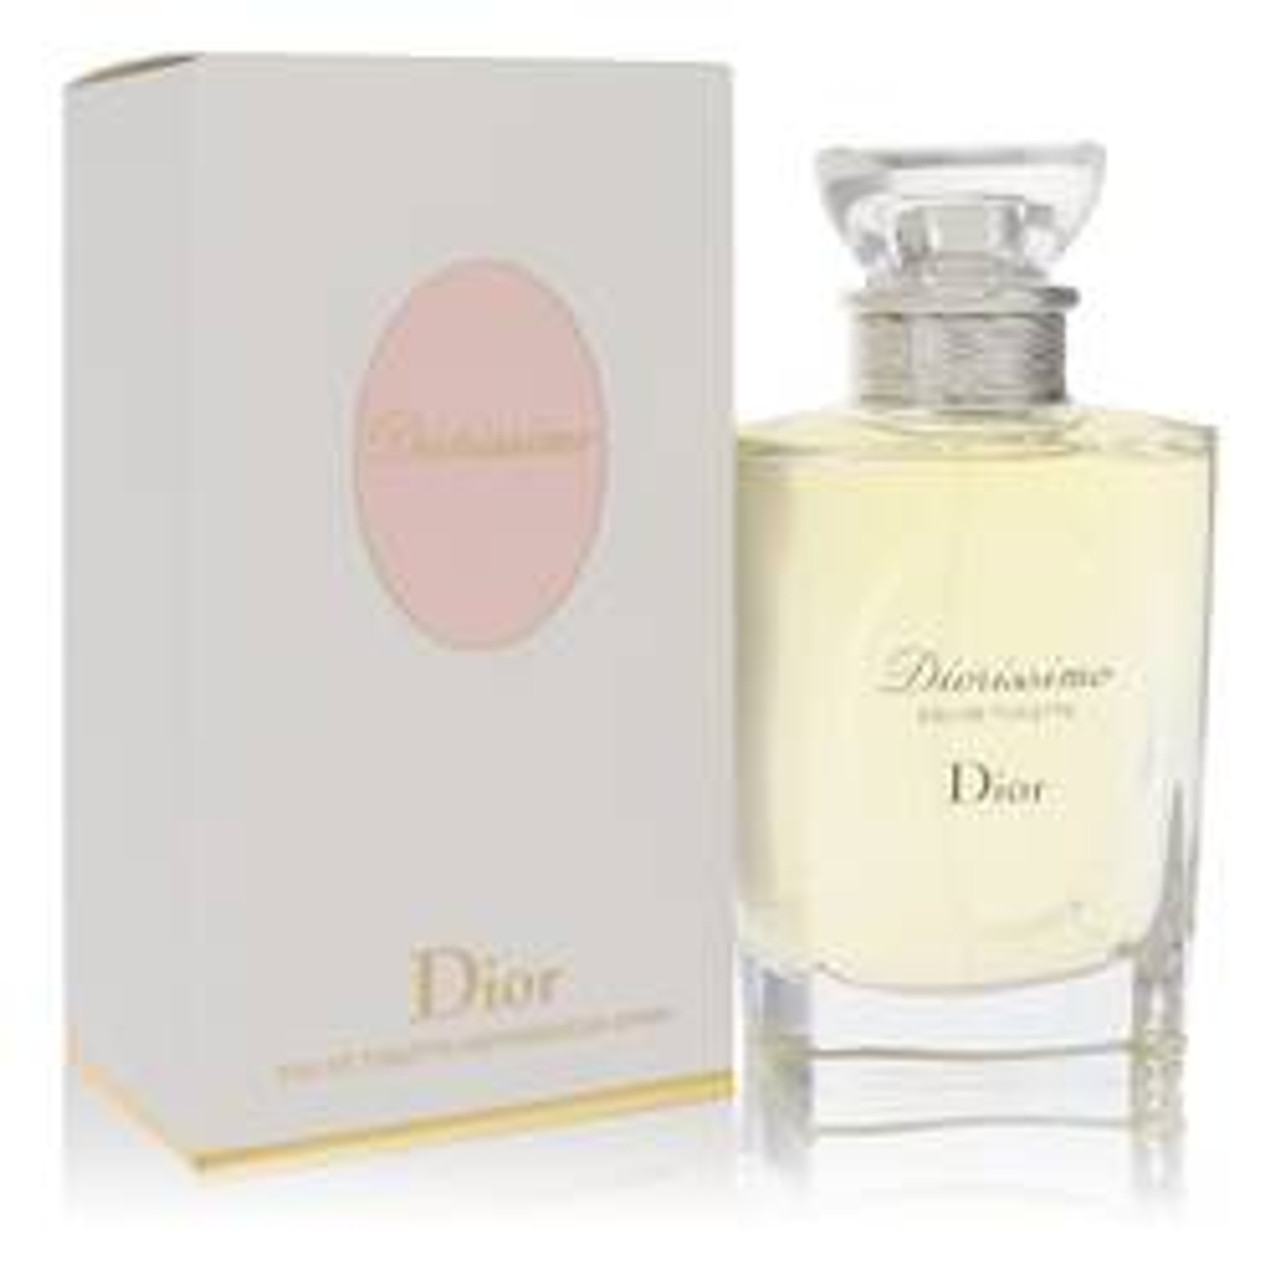 Diorissimo Perfume By Christian Dior Eau De Toilette Spray 3.4 oz for Women - *Pre-Order